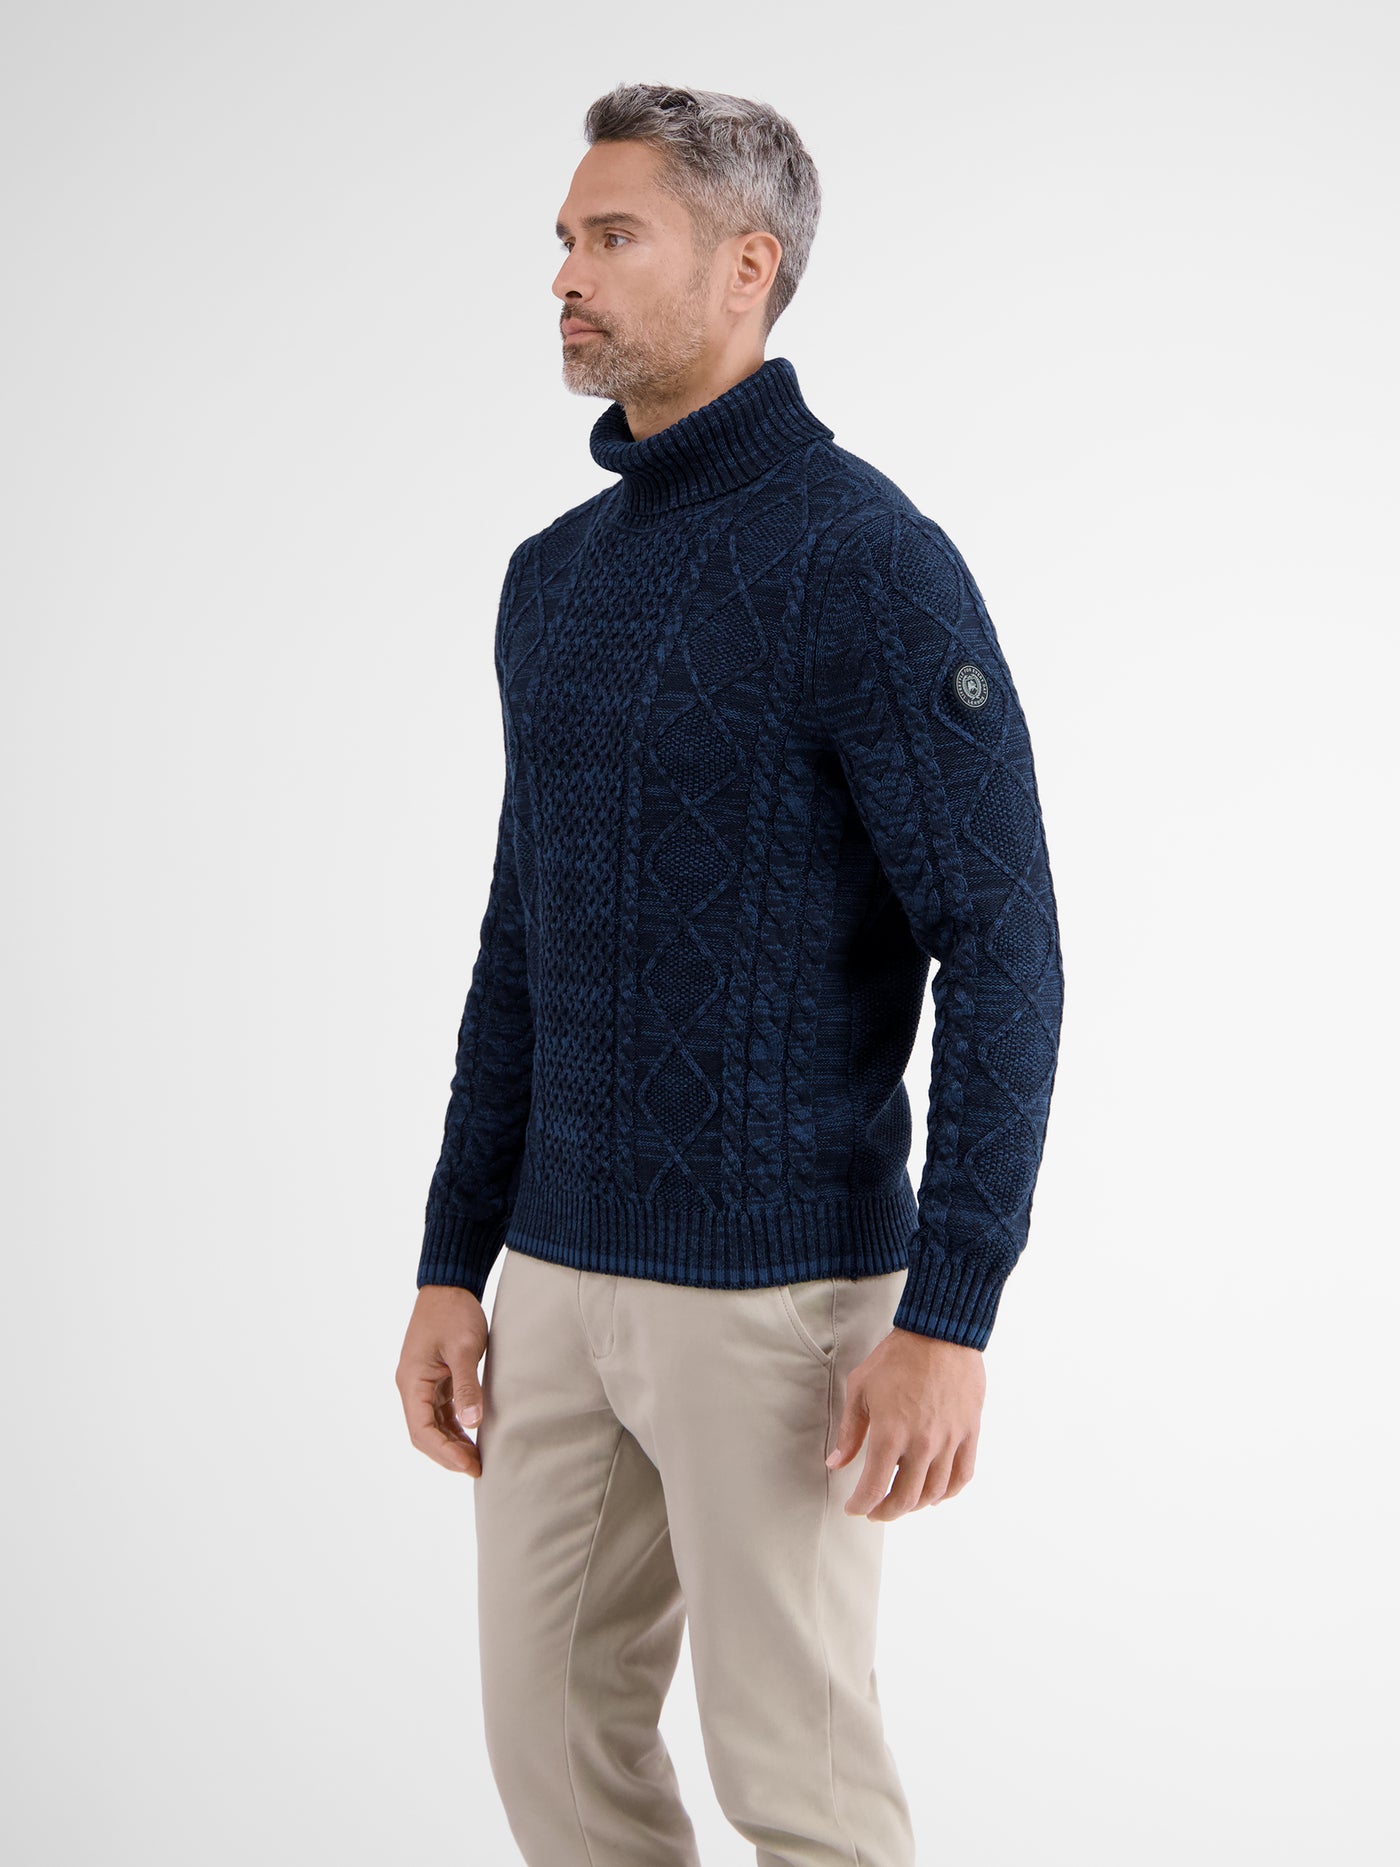 Jacquard turtleneck sweater